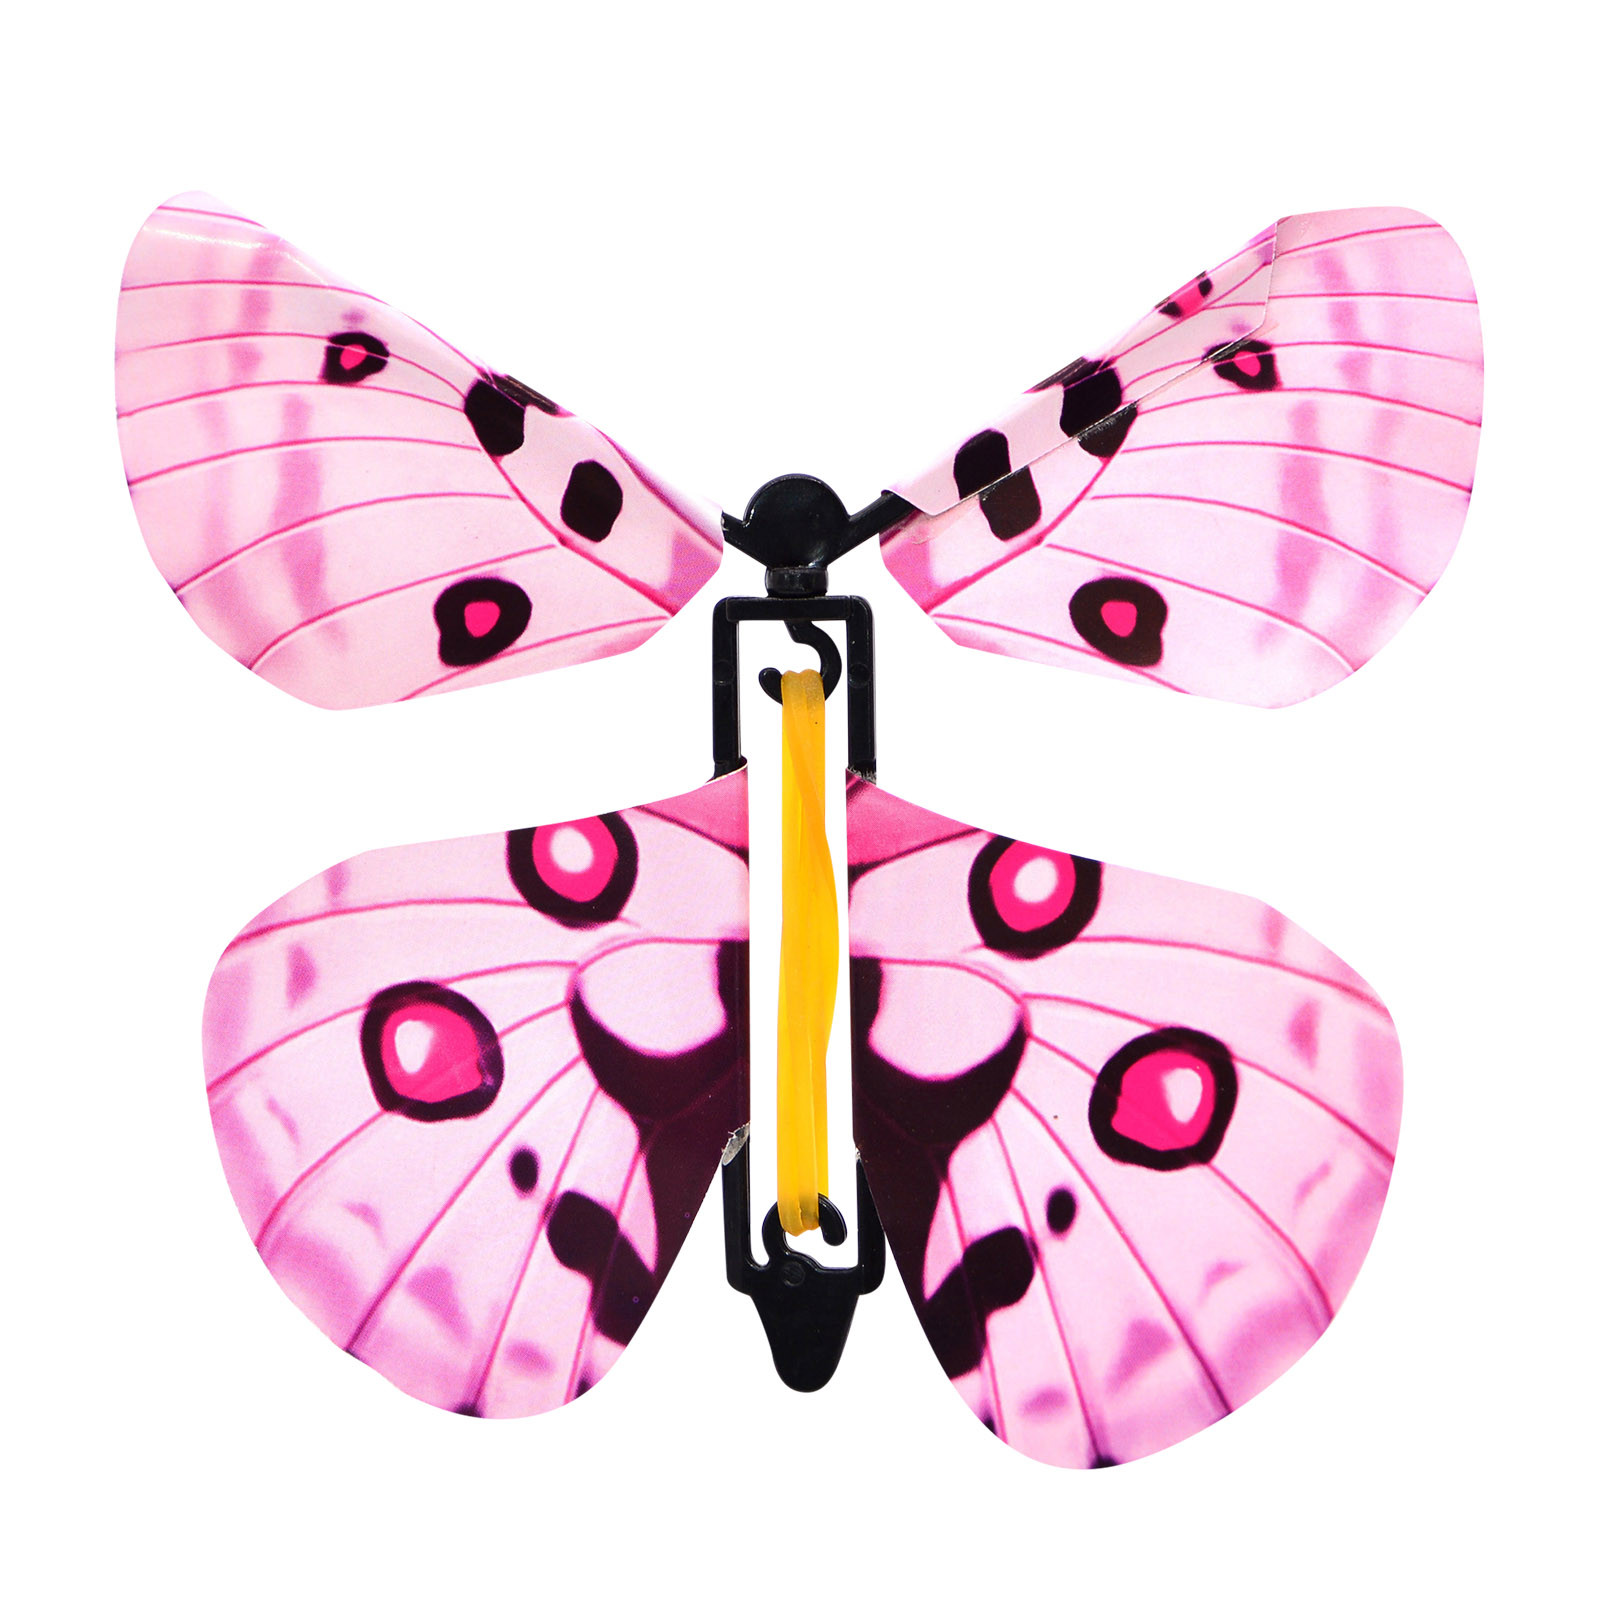 6PCS Color Random Kunststoff Fliegender Schmetterling Neuheit Gag Toys 